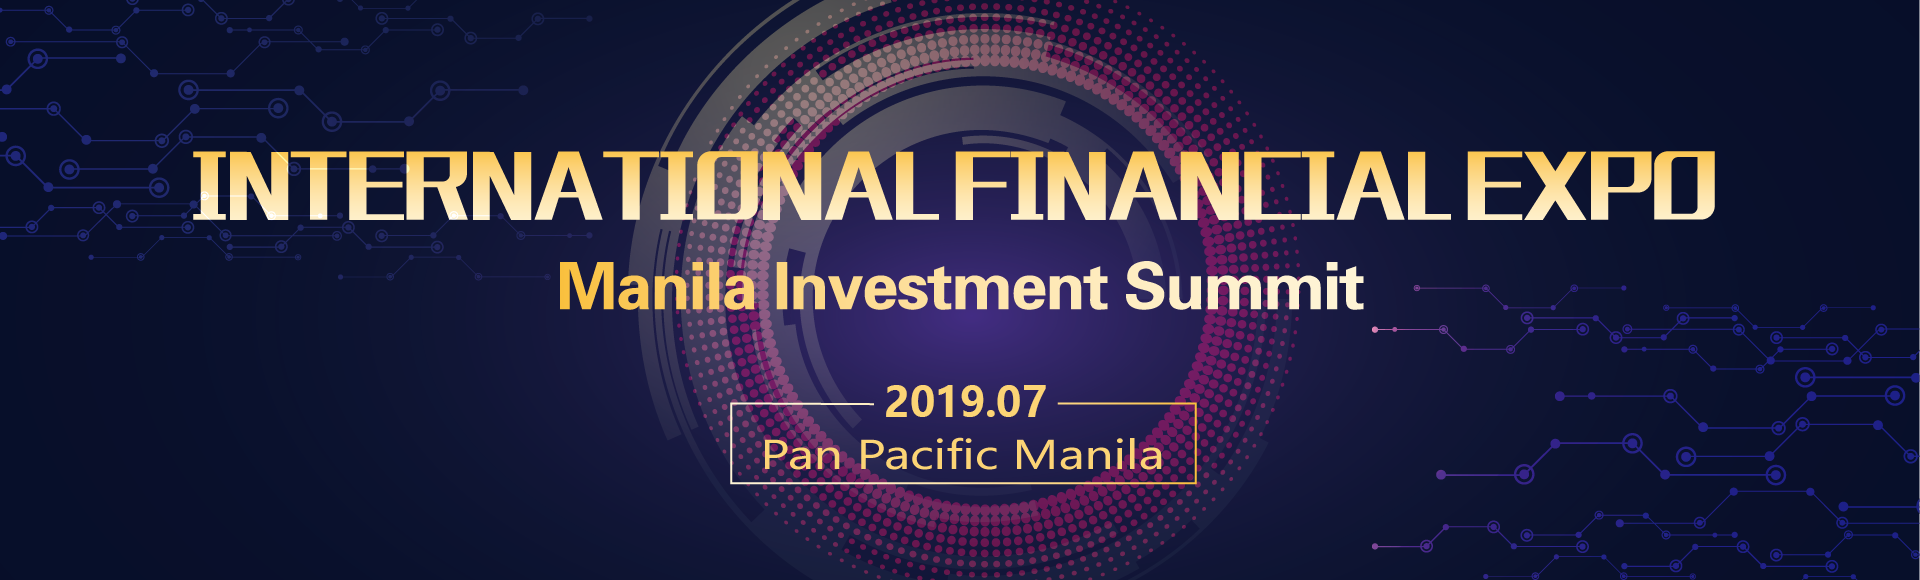 Manila Investment Summit